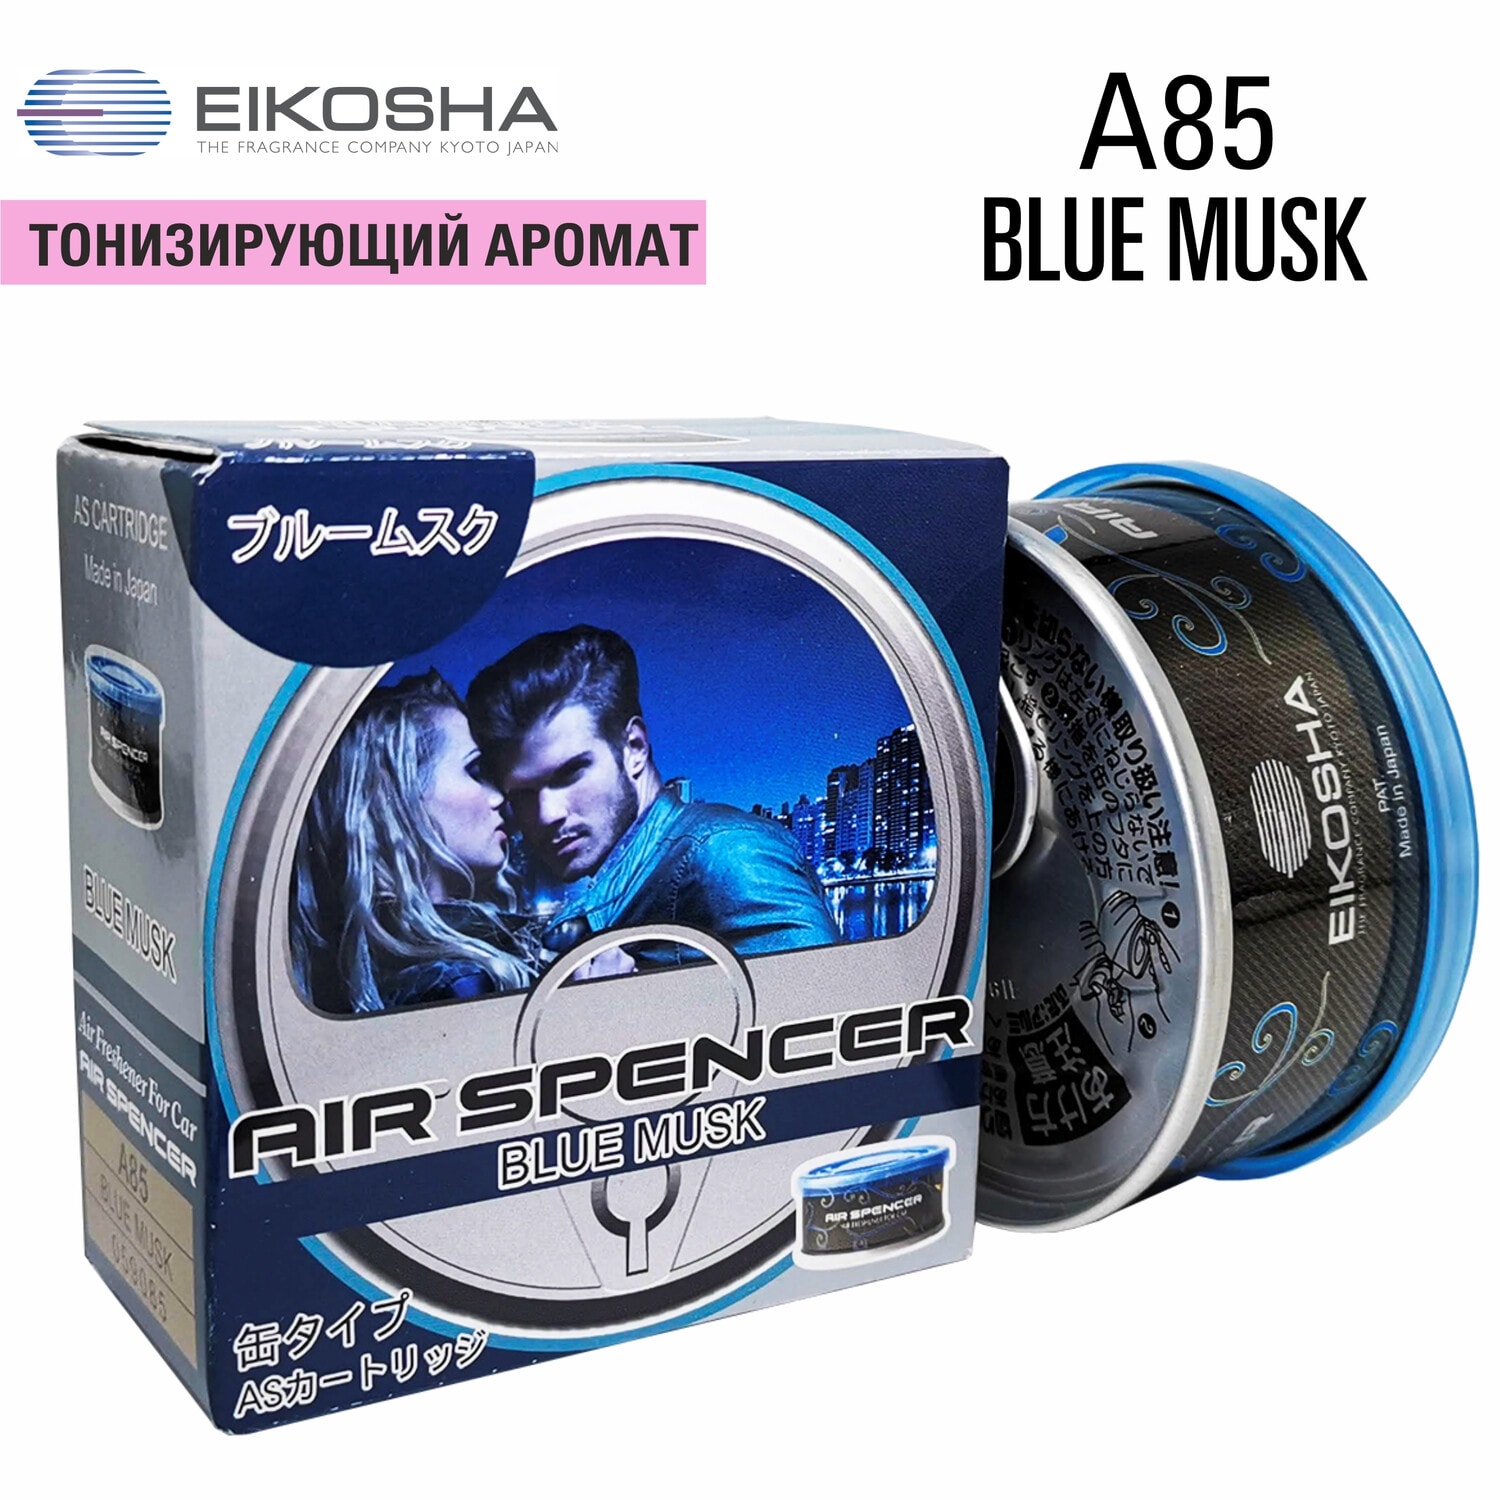 Ароматизатор меловый EIKOSHA Air Spencer Blue Musk А85 (ледяной шторм) / 590851